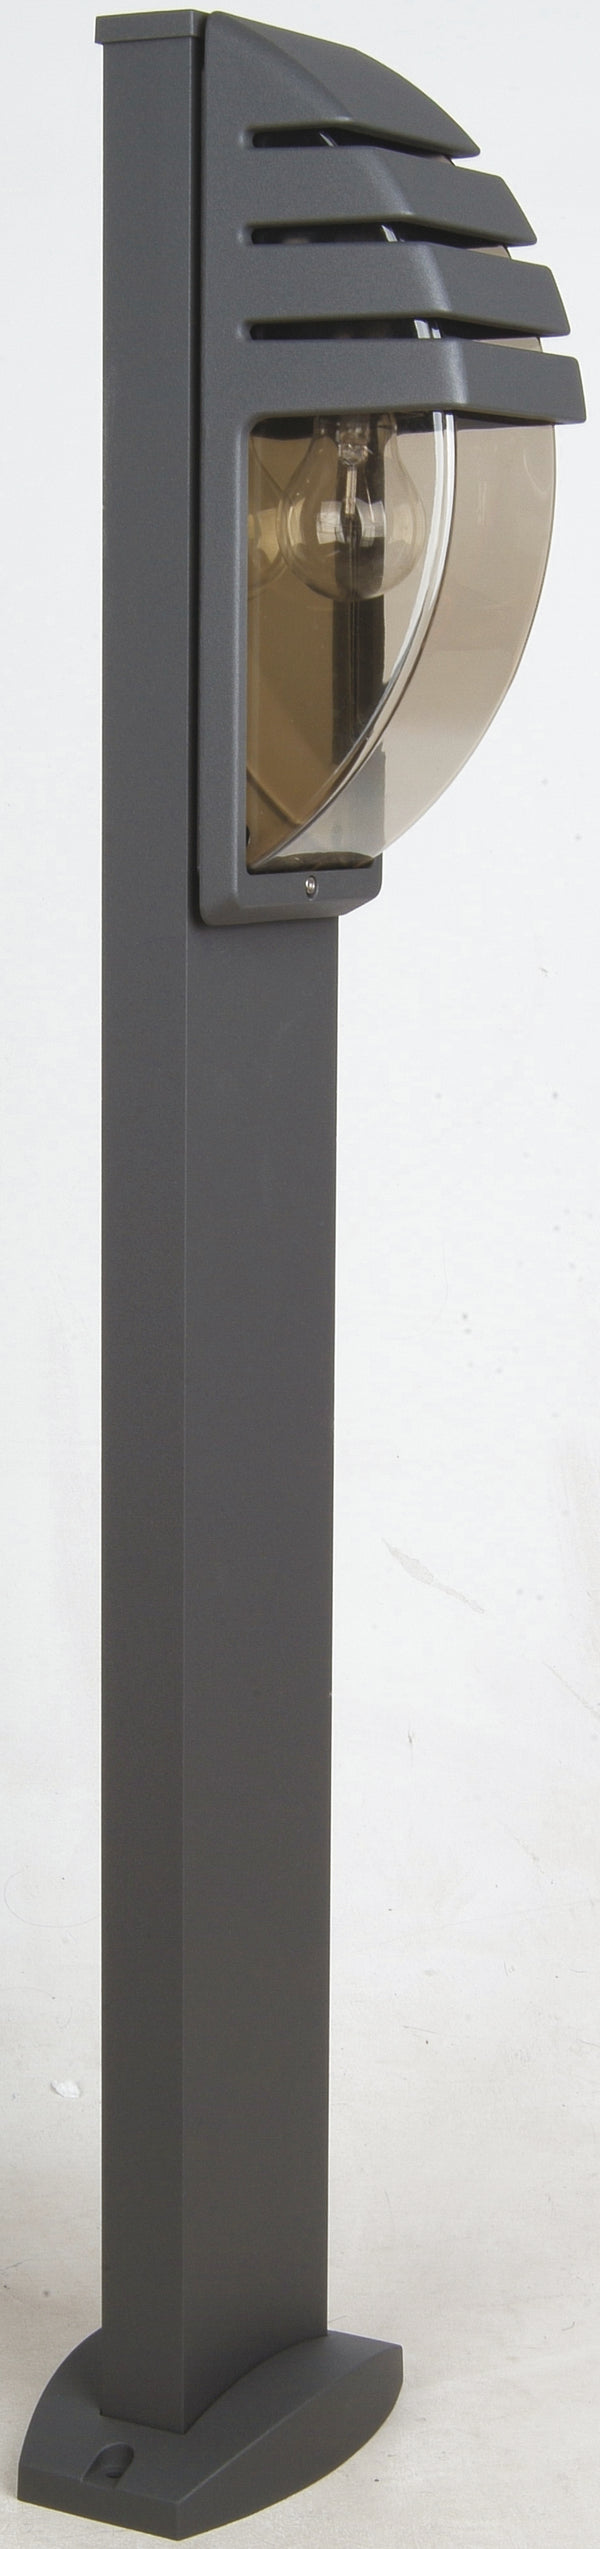 Pole Aluminium anthrazit Diffusor Polycarbonat abgedunkelt Outdoor Garten E27 Intec I-11836R sconto